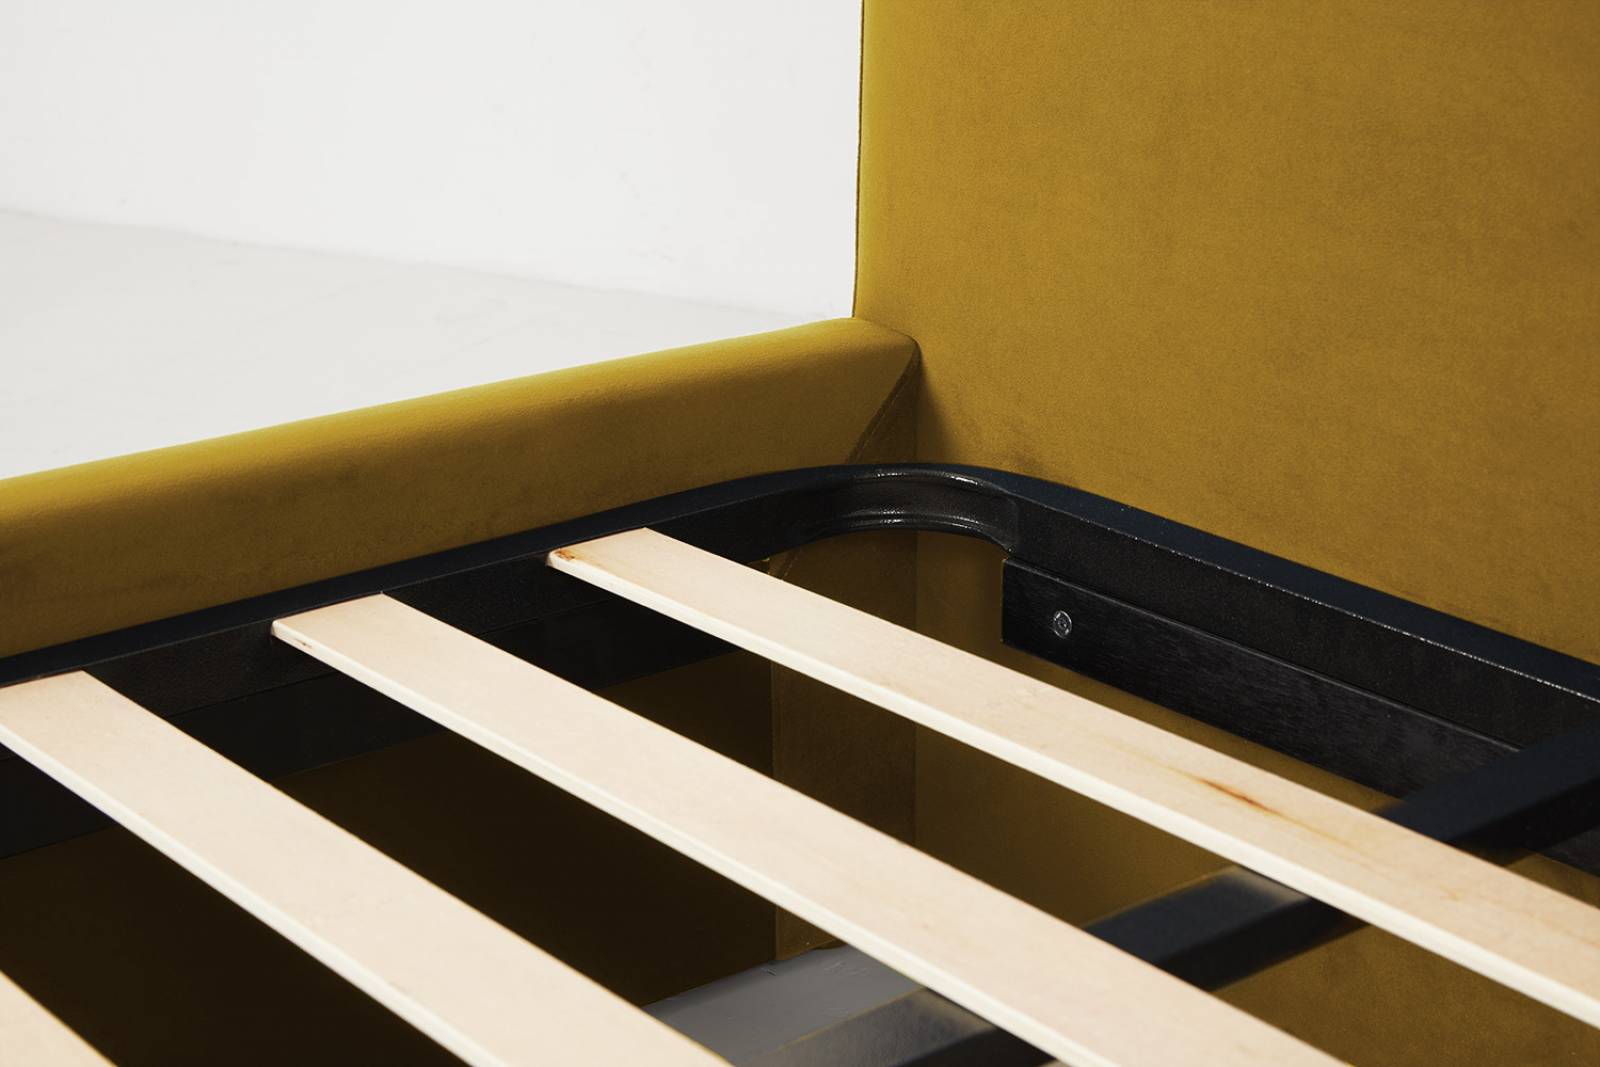 Swyft Bed 01 - Double Size Bed Frame - Velvet Mustard thumbnails